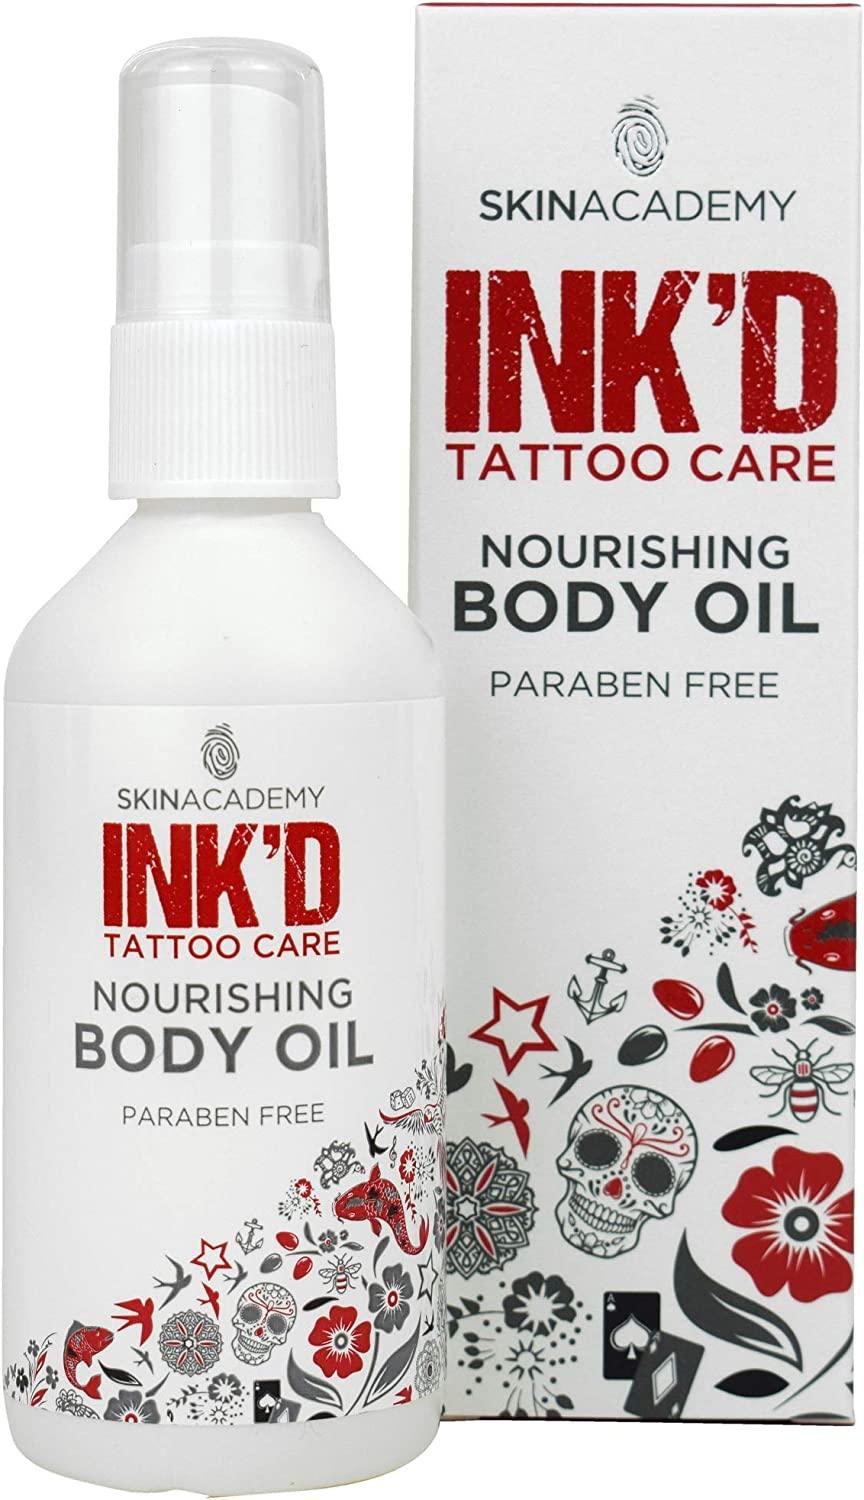 Skin Academy INK'D Vegan Tattoo Care Hydrating Serum & Oil -WAS £4.99 PLUS VAT - Tattoo Everything Supplies